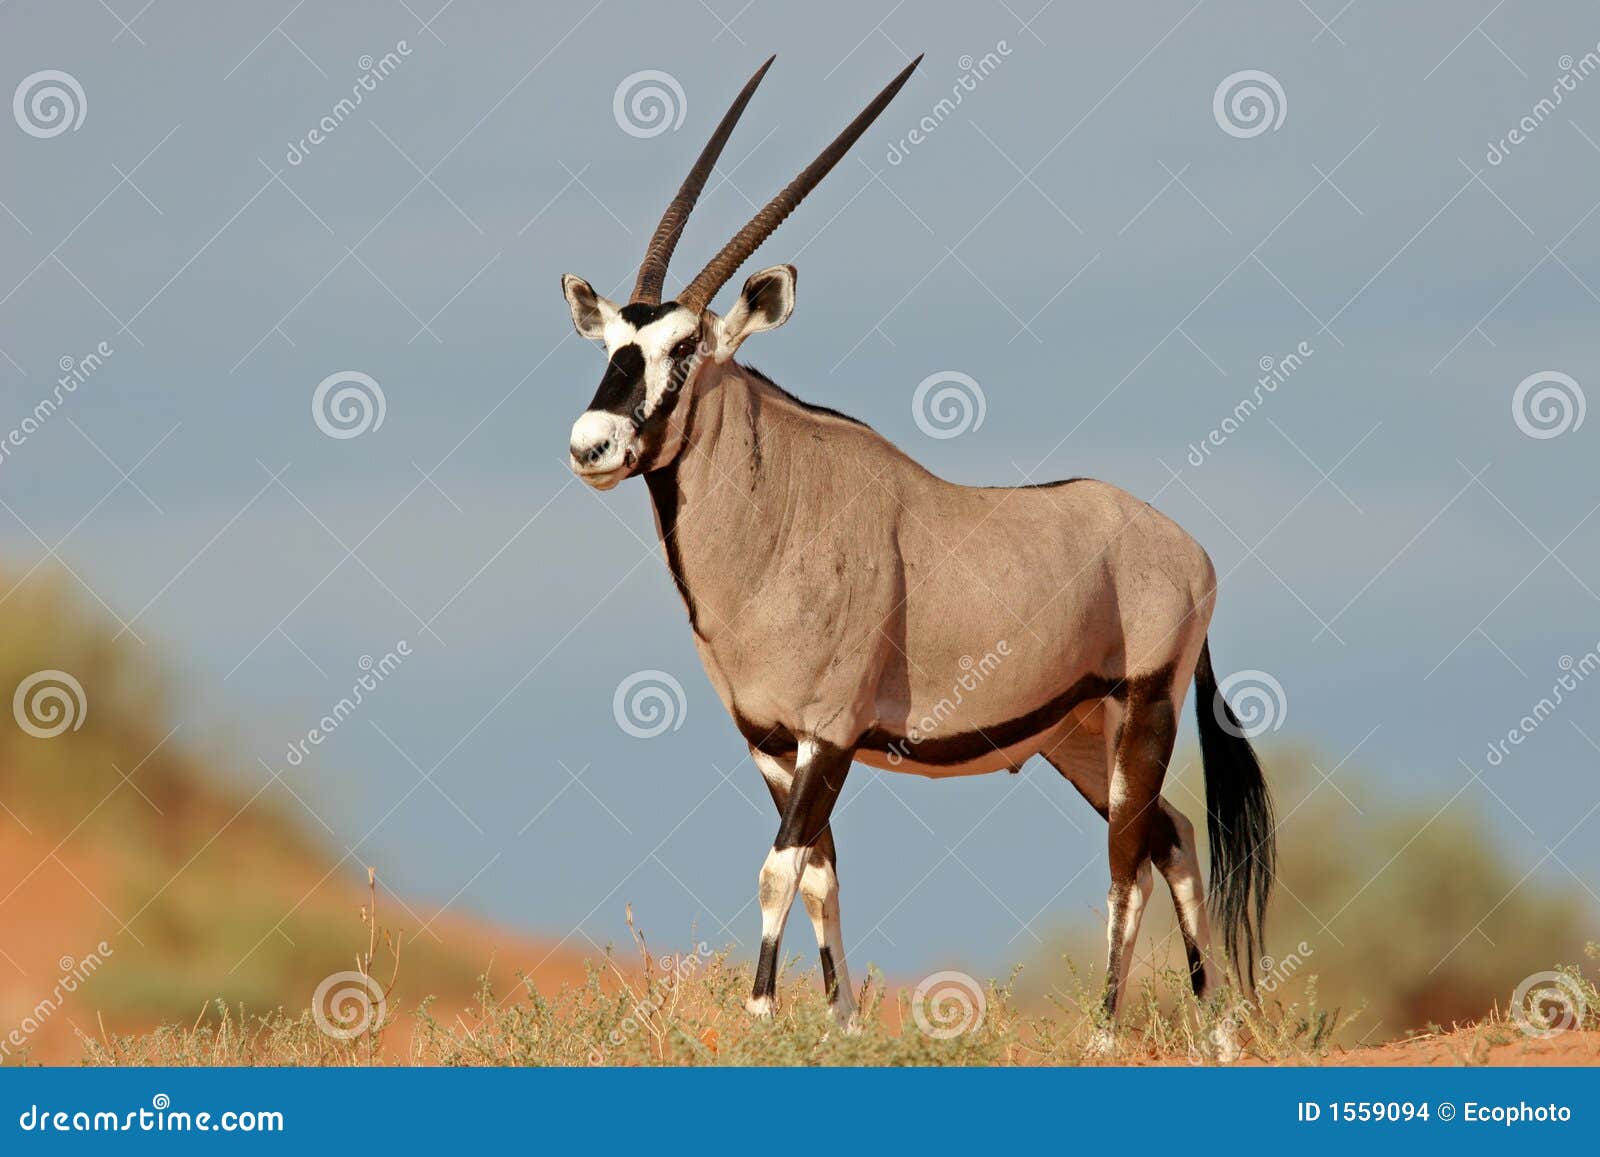 gemsbok antelope, kalahari desert, south africa